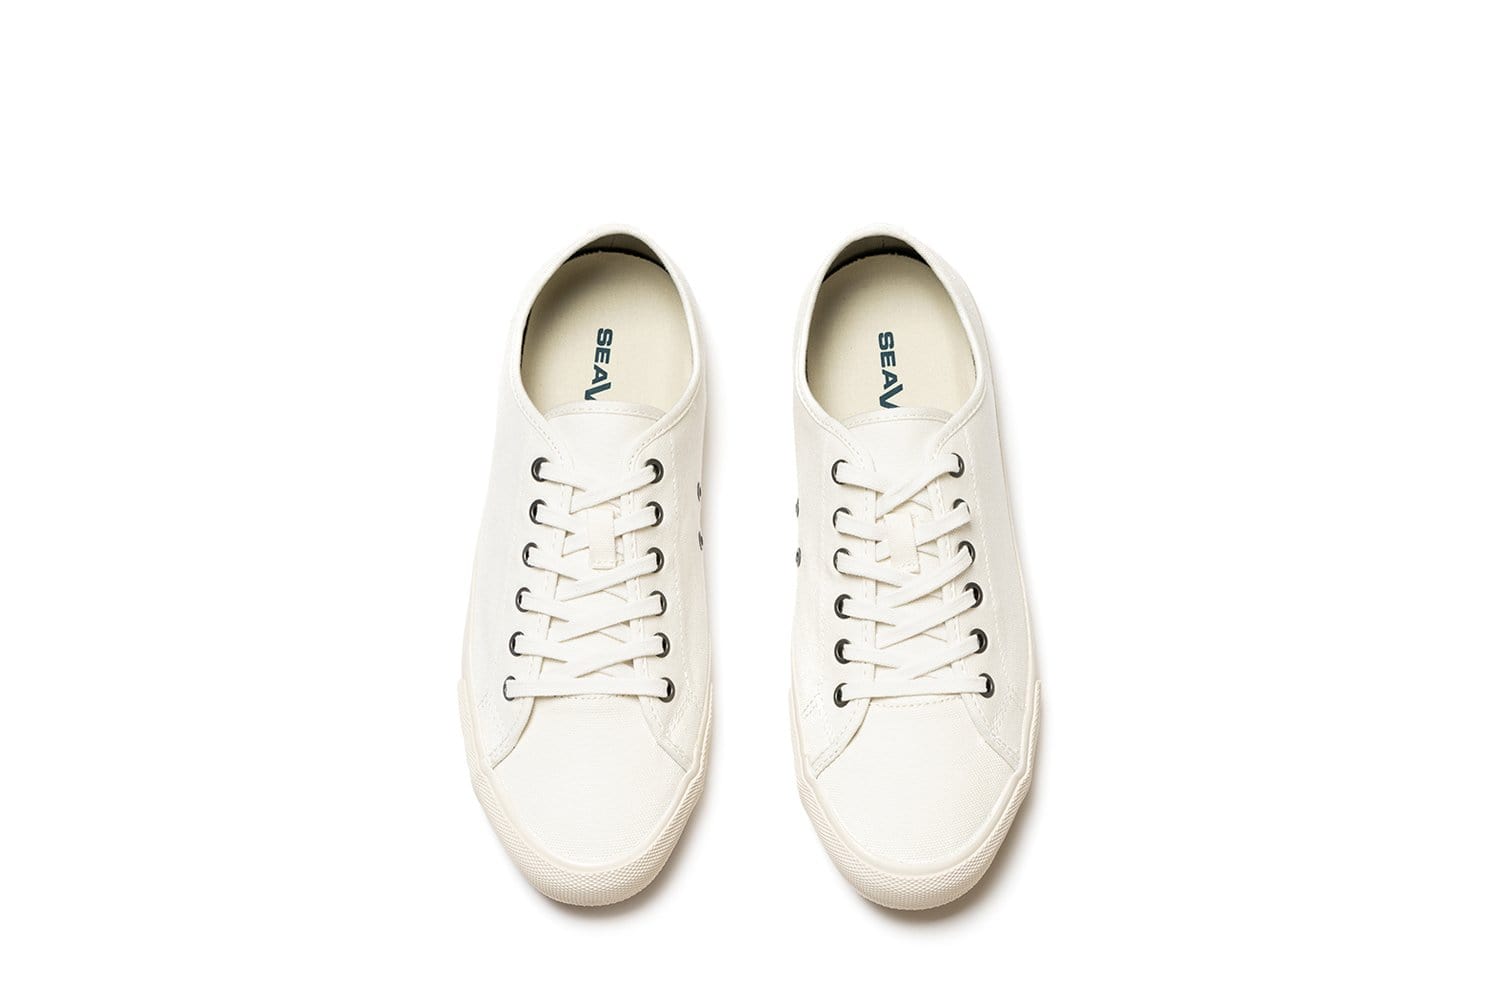 Obtaom Women's Canvas Shoes Low Top Fashion Sneakers White Size 6 Item  ZY-K21011 | eBay